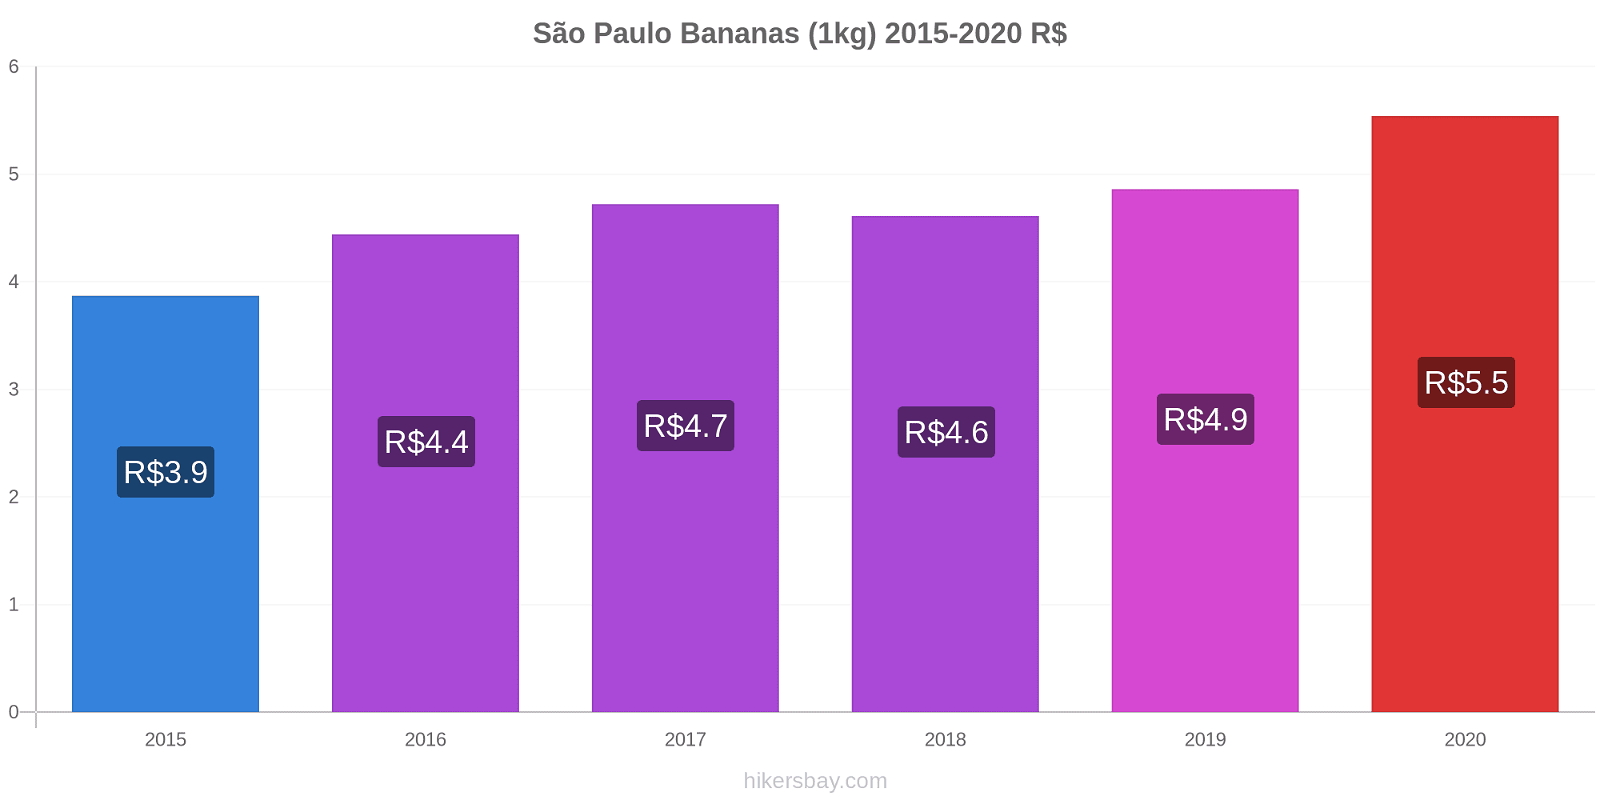 São Paulo price changes Bananas (1kg) hikersbay.com